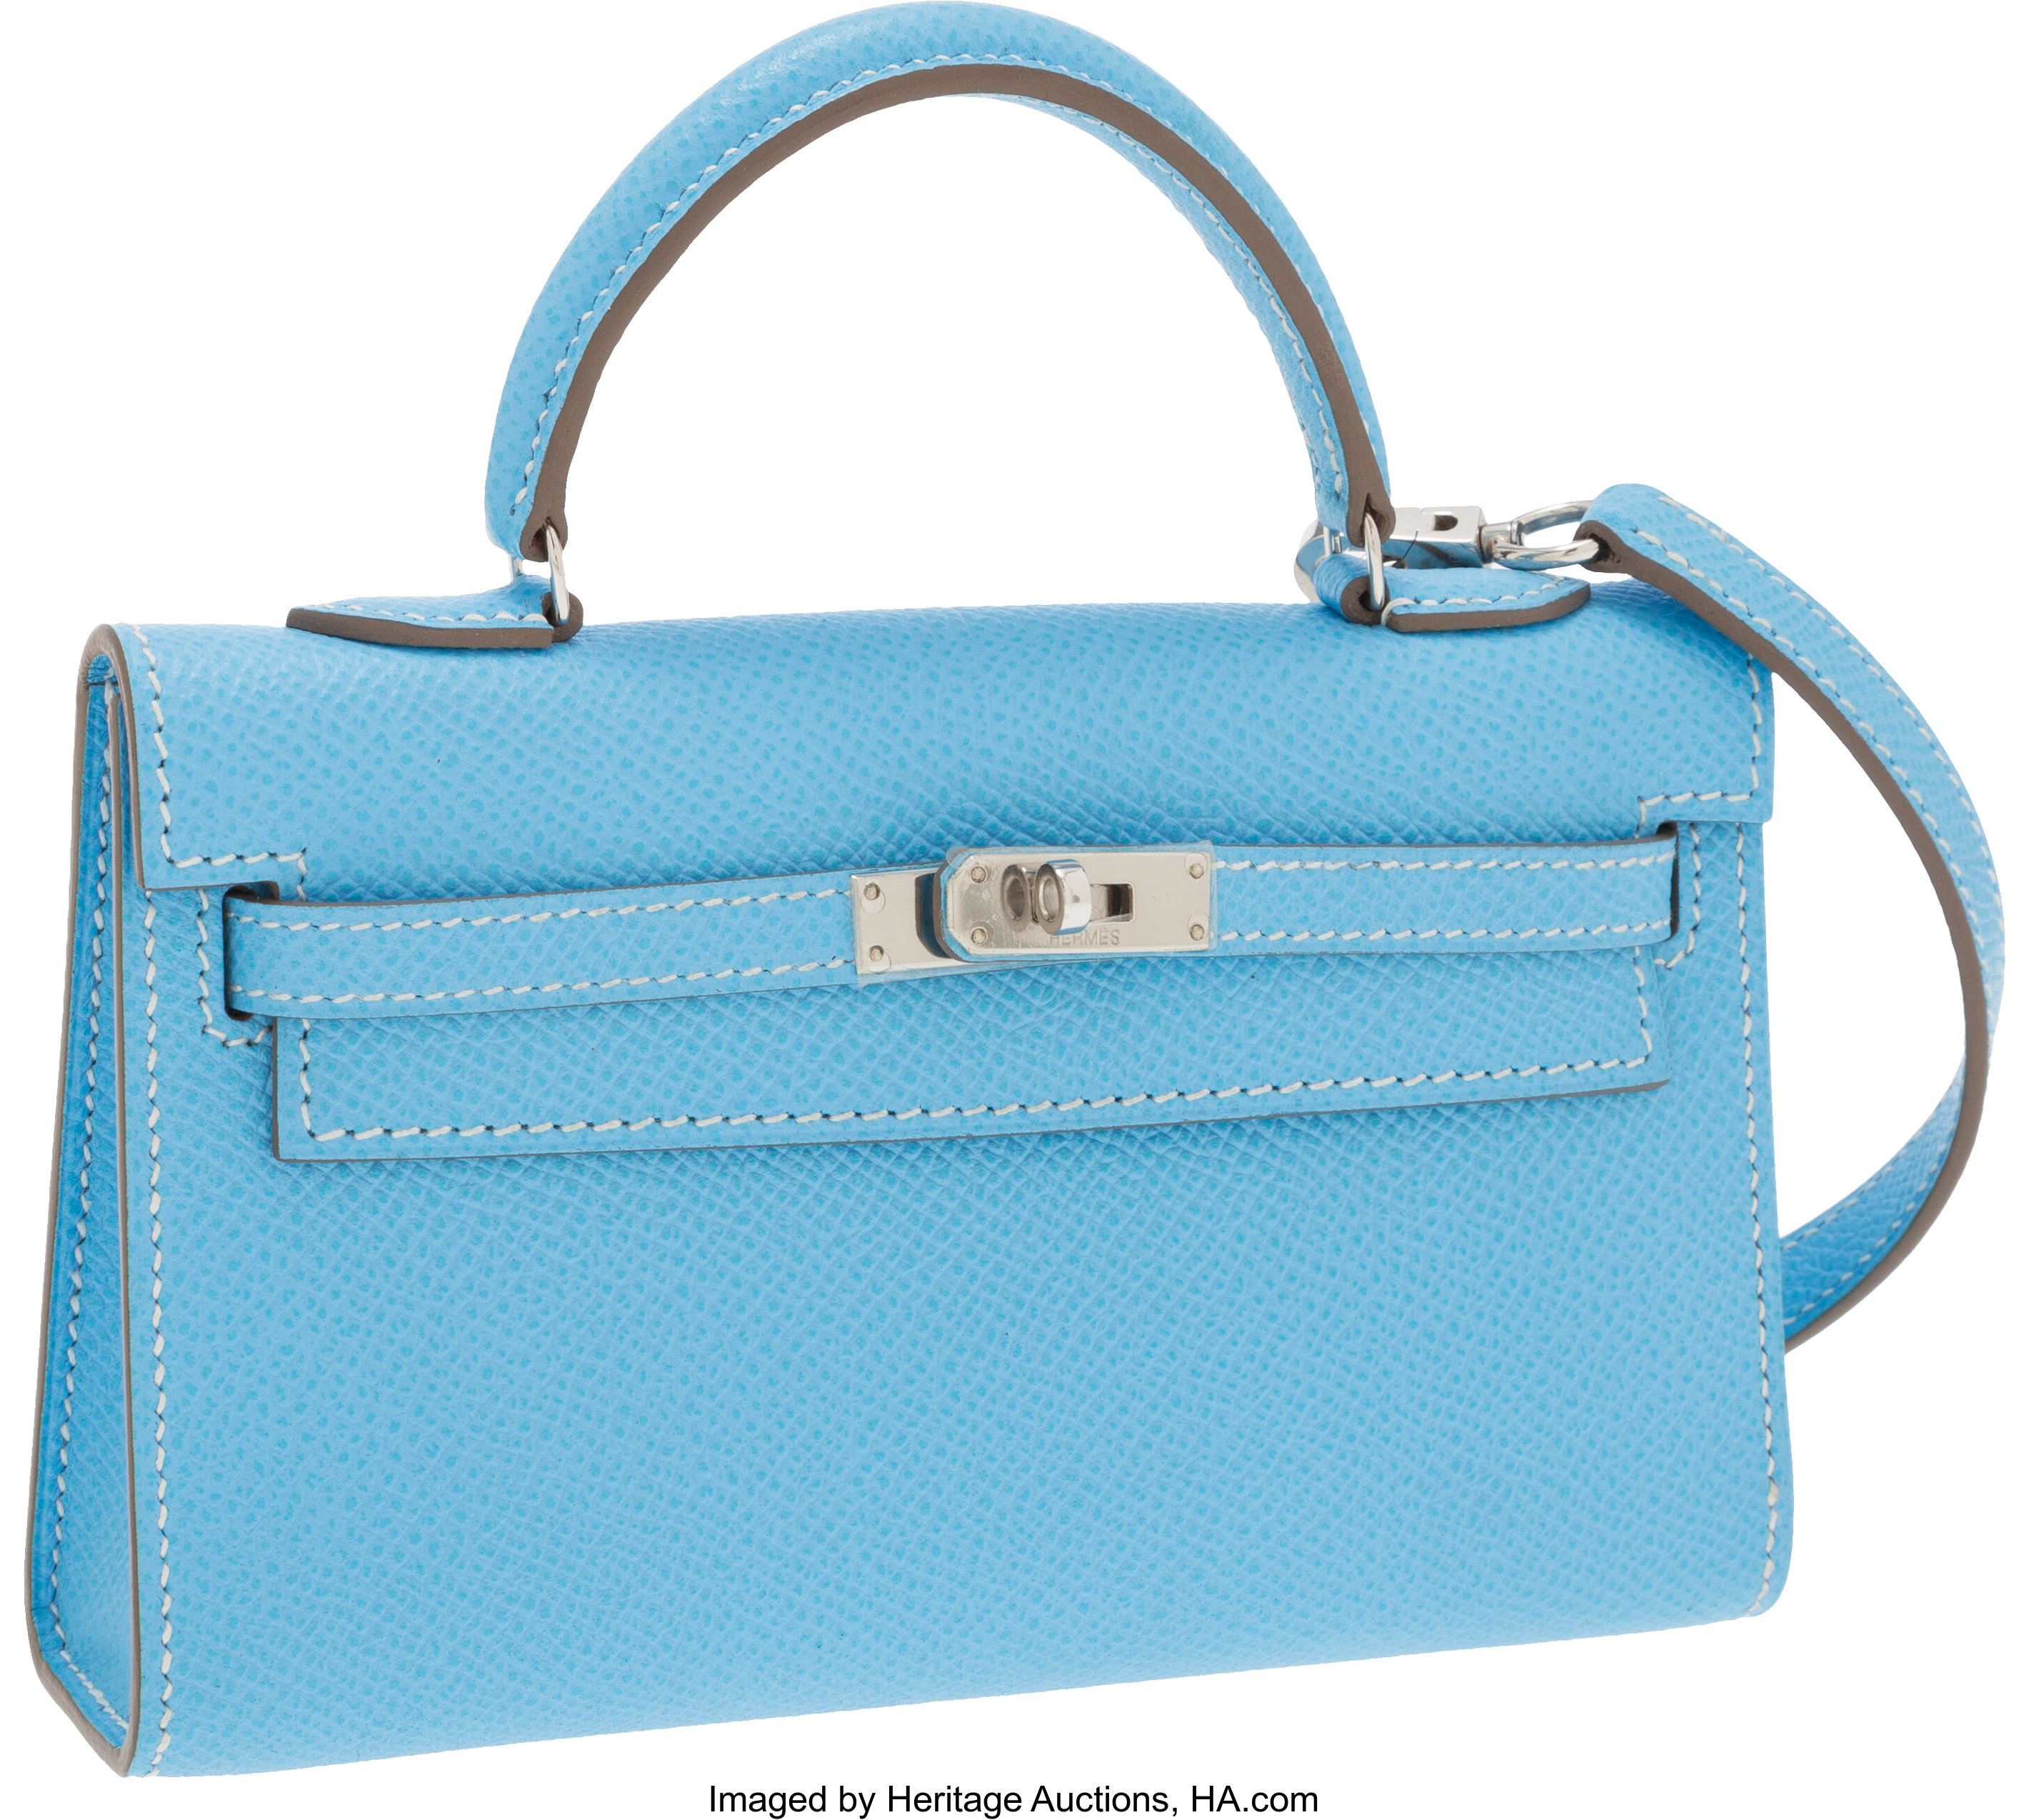 Hermes Mini Kelly Bag Auction